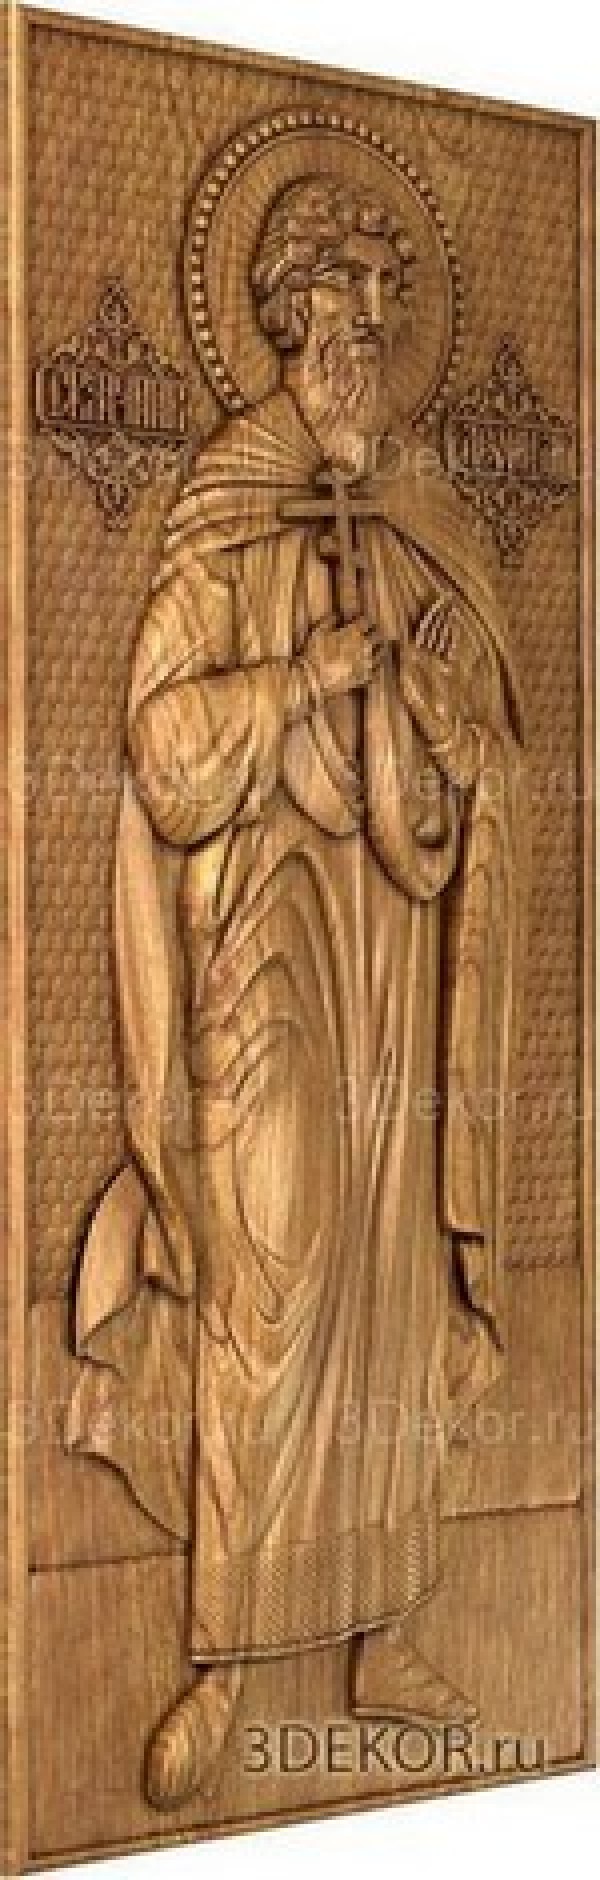 Икона Святой мученик Леонид